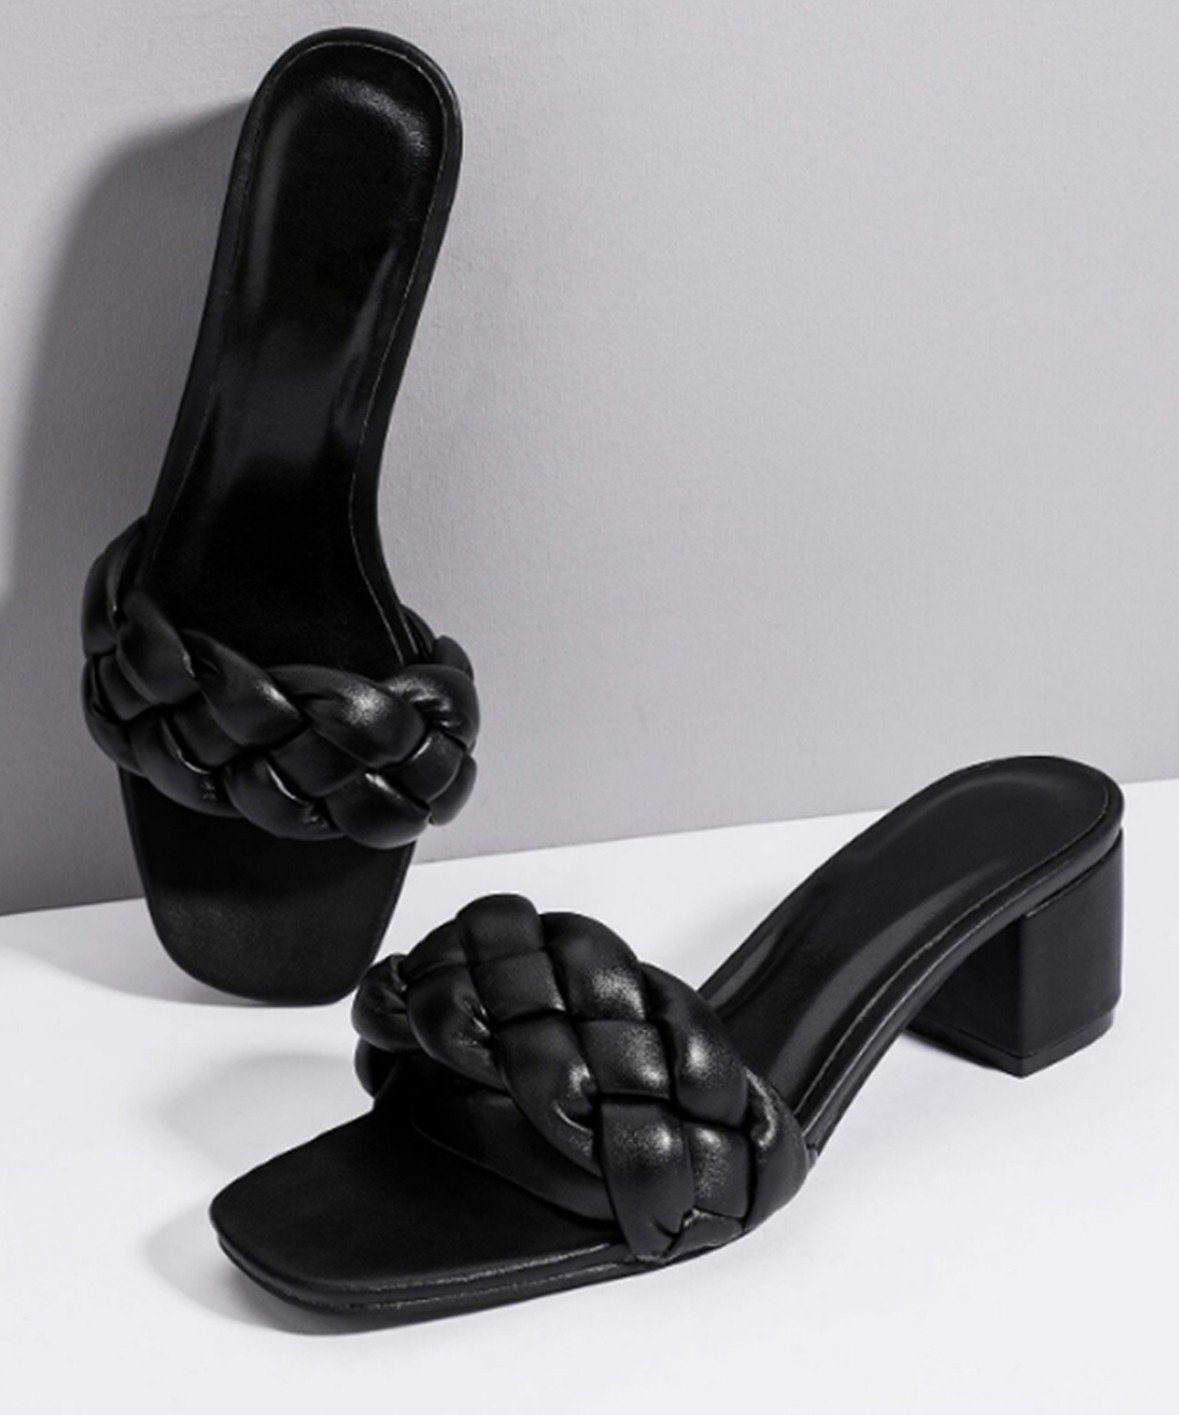 Braided slip on black heels